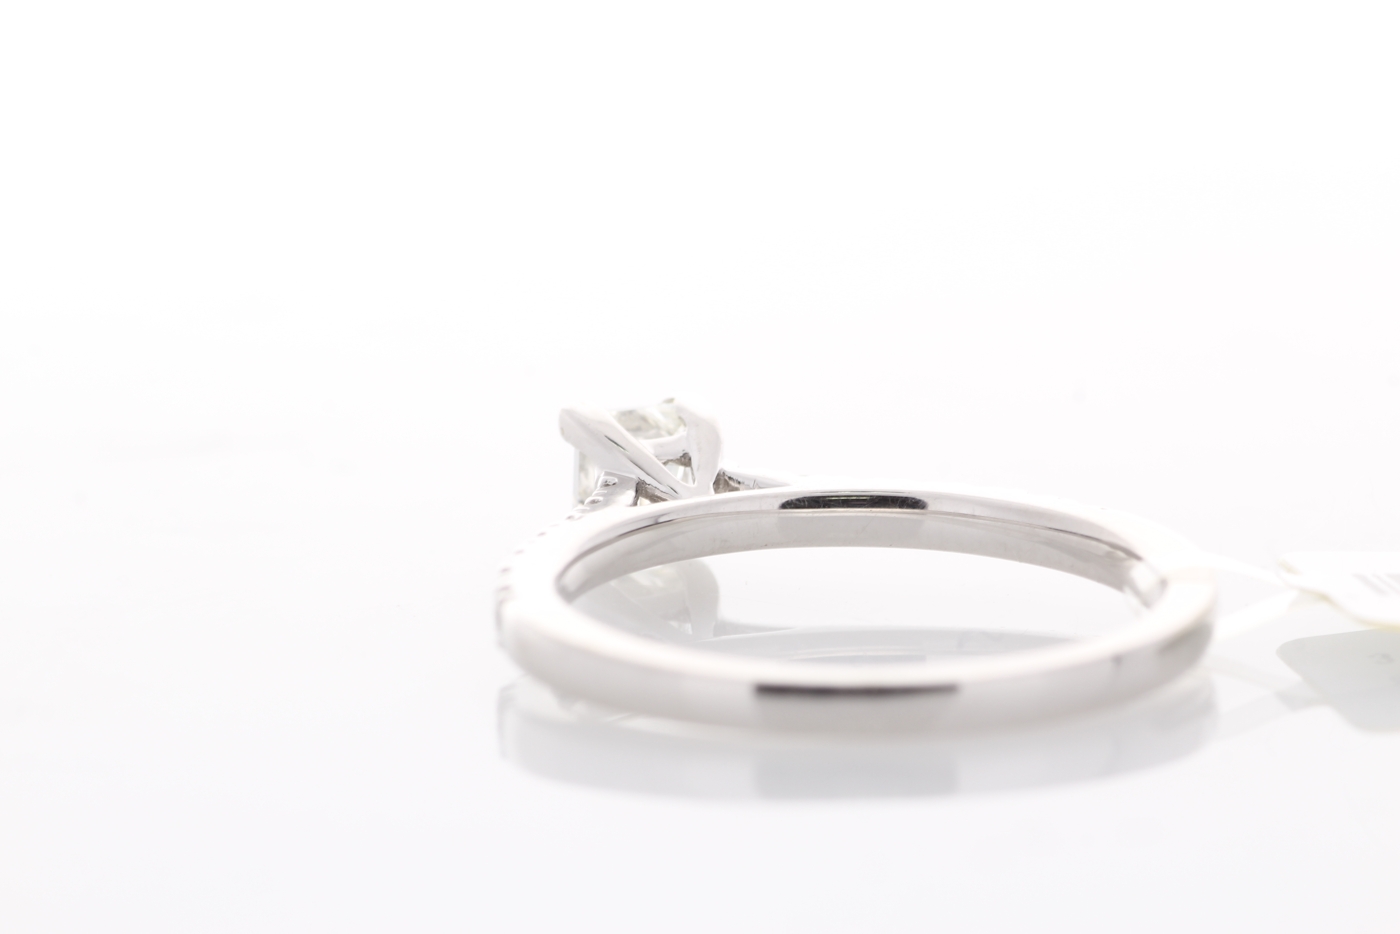 18ct White Gold Single Stone Prong Set With Stone Set Shoulders Diamond Ring 0.61 Carats - Image 5 of 5